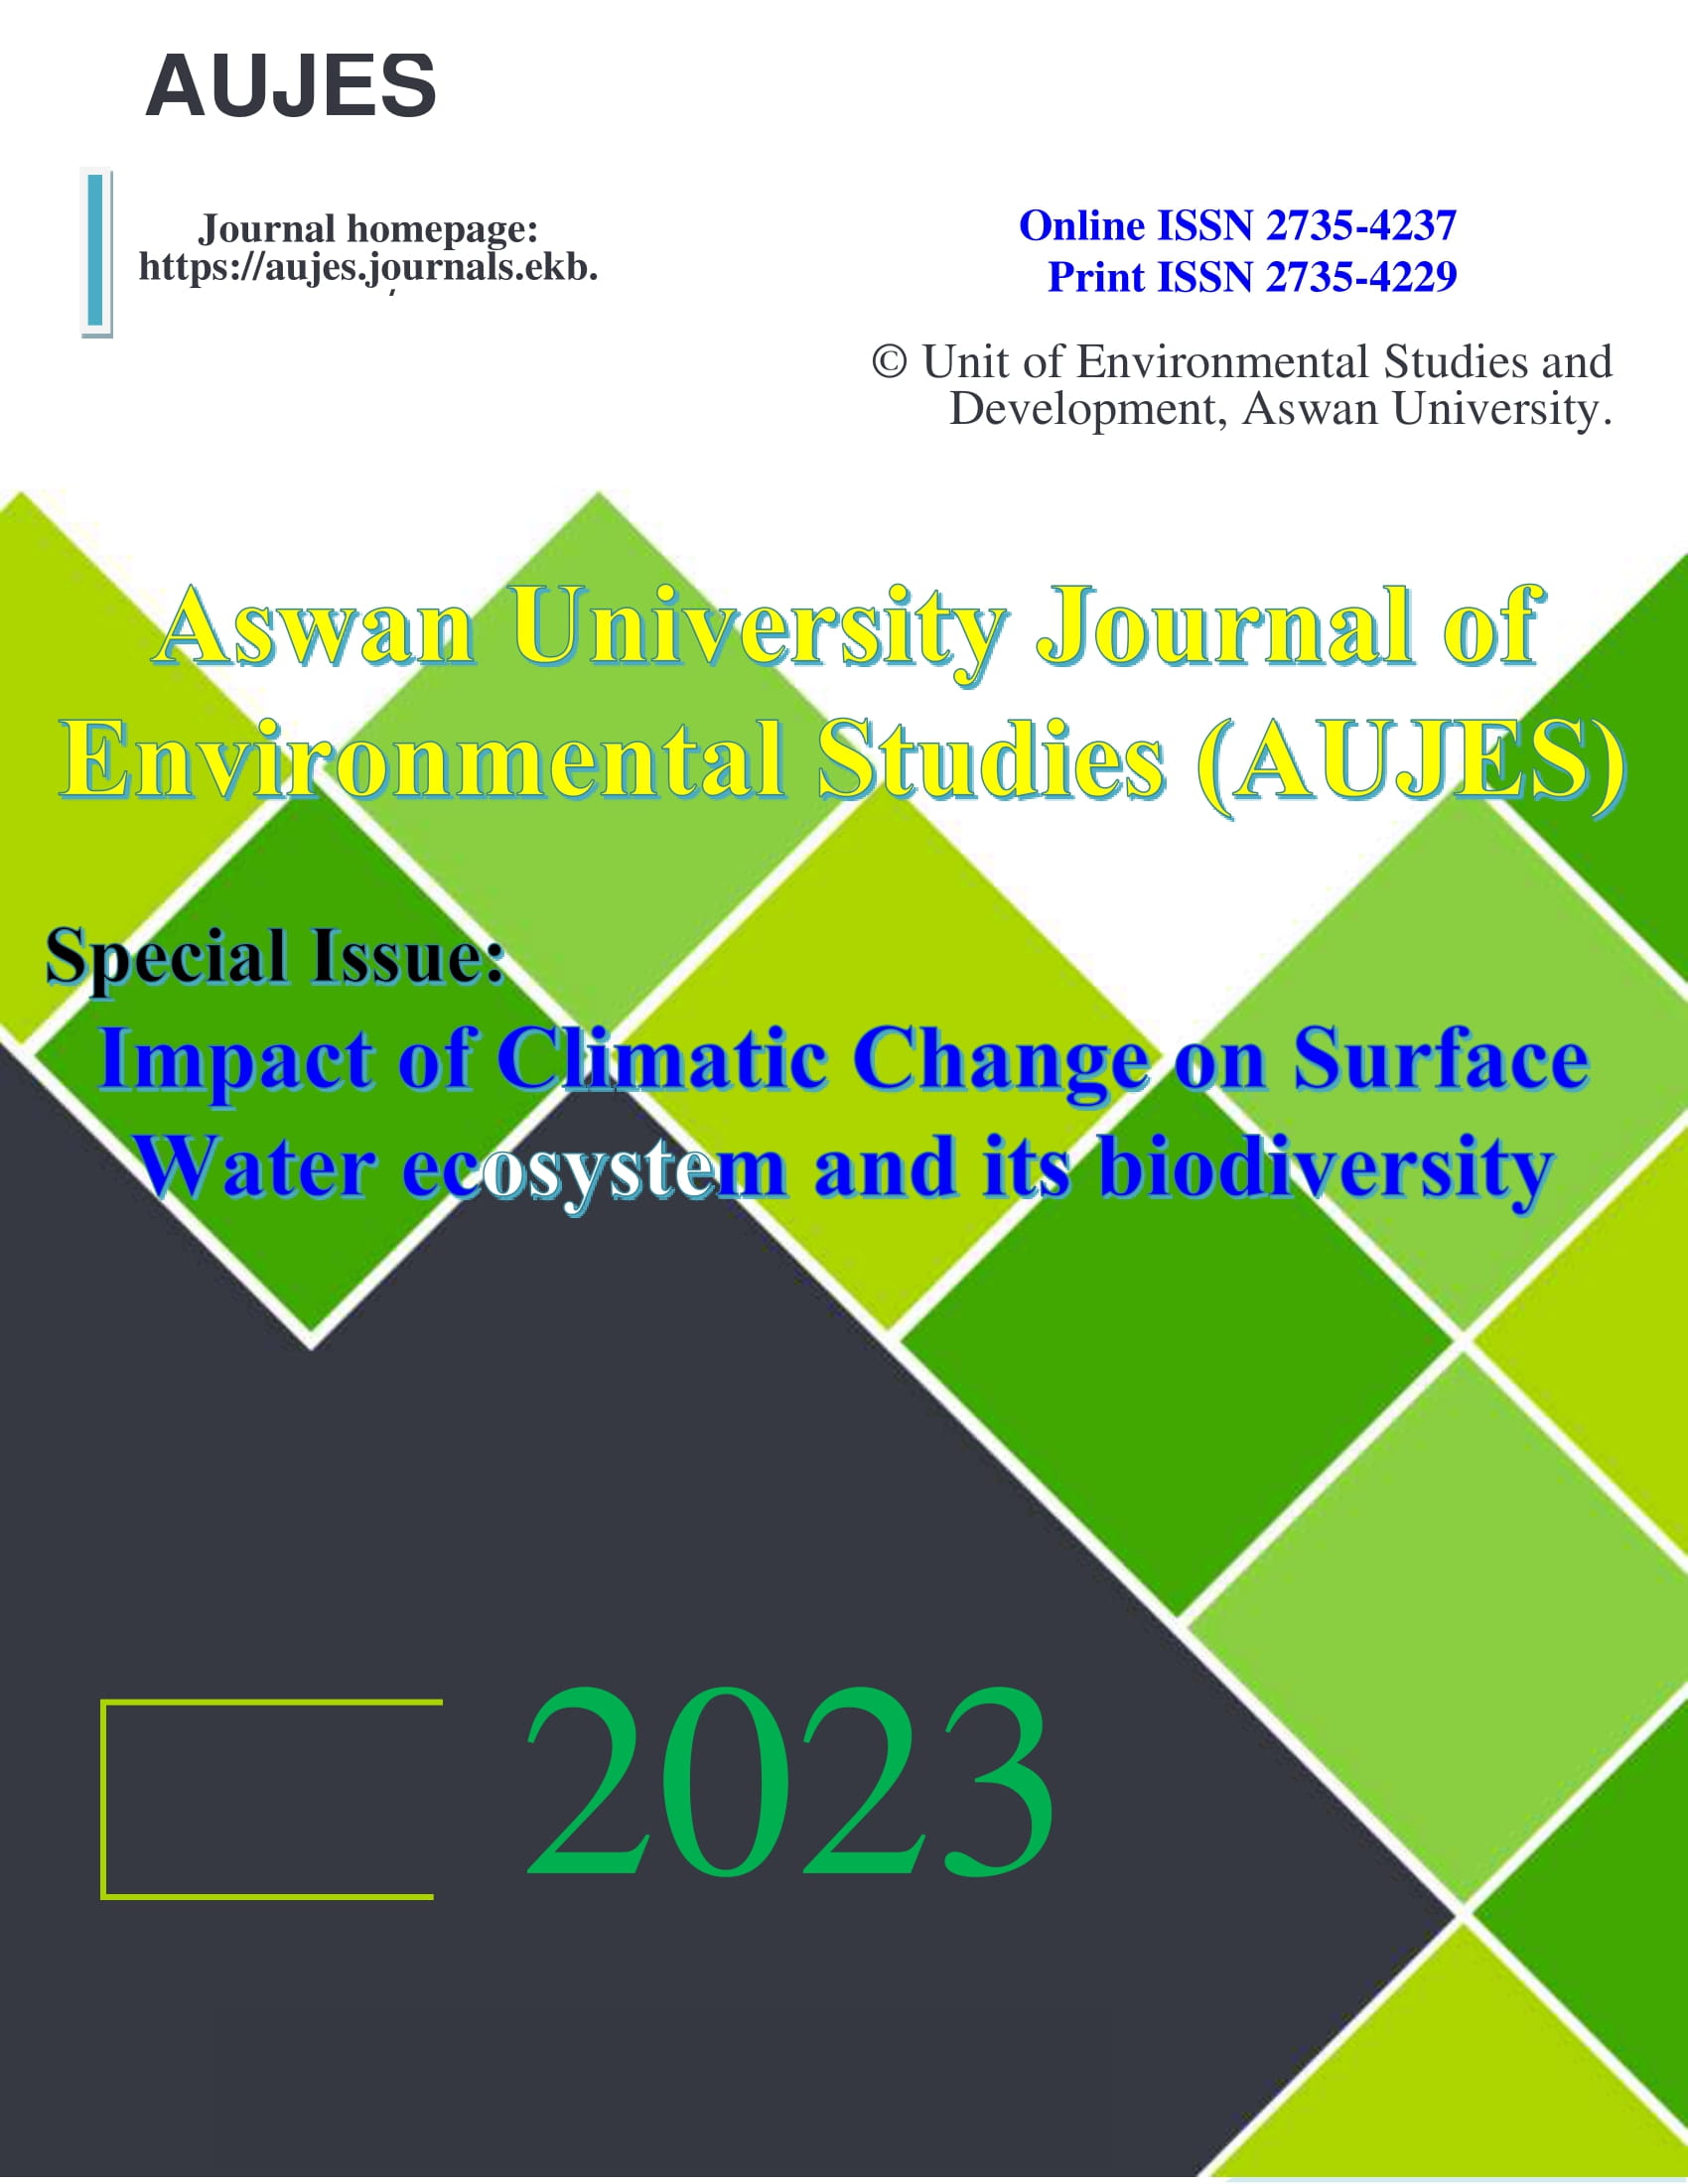 Aswan University Journal of Environmental Studies